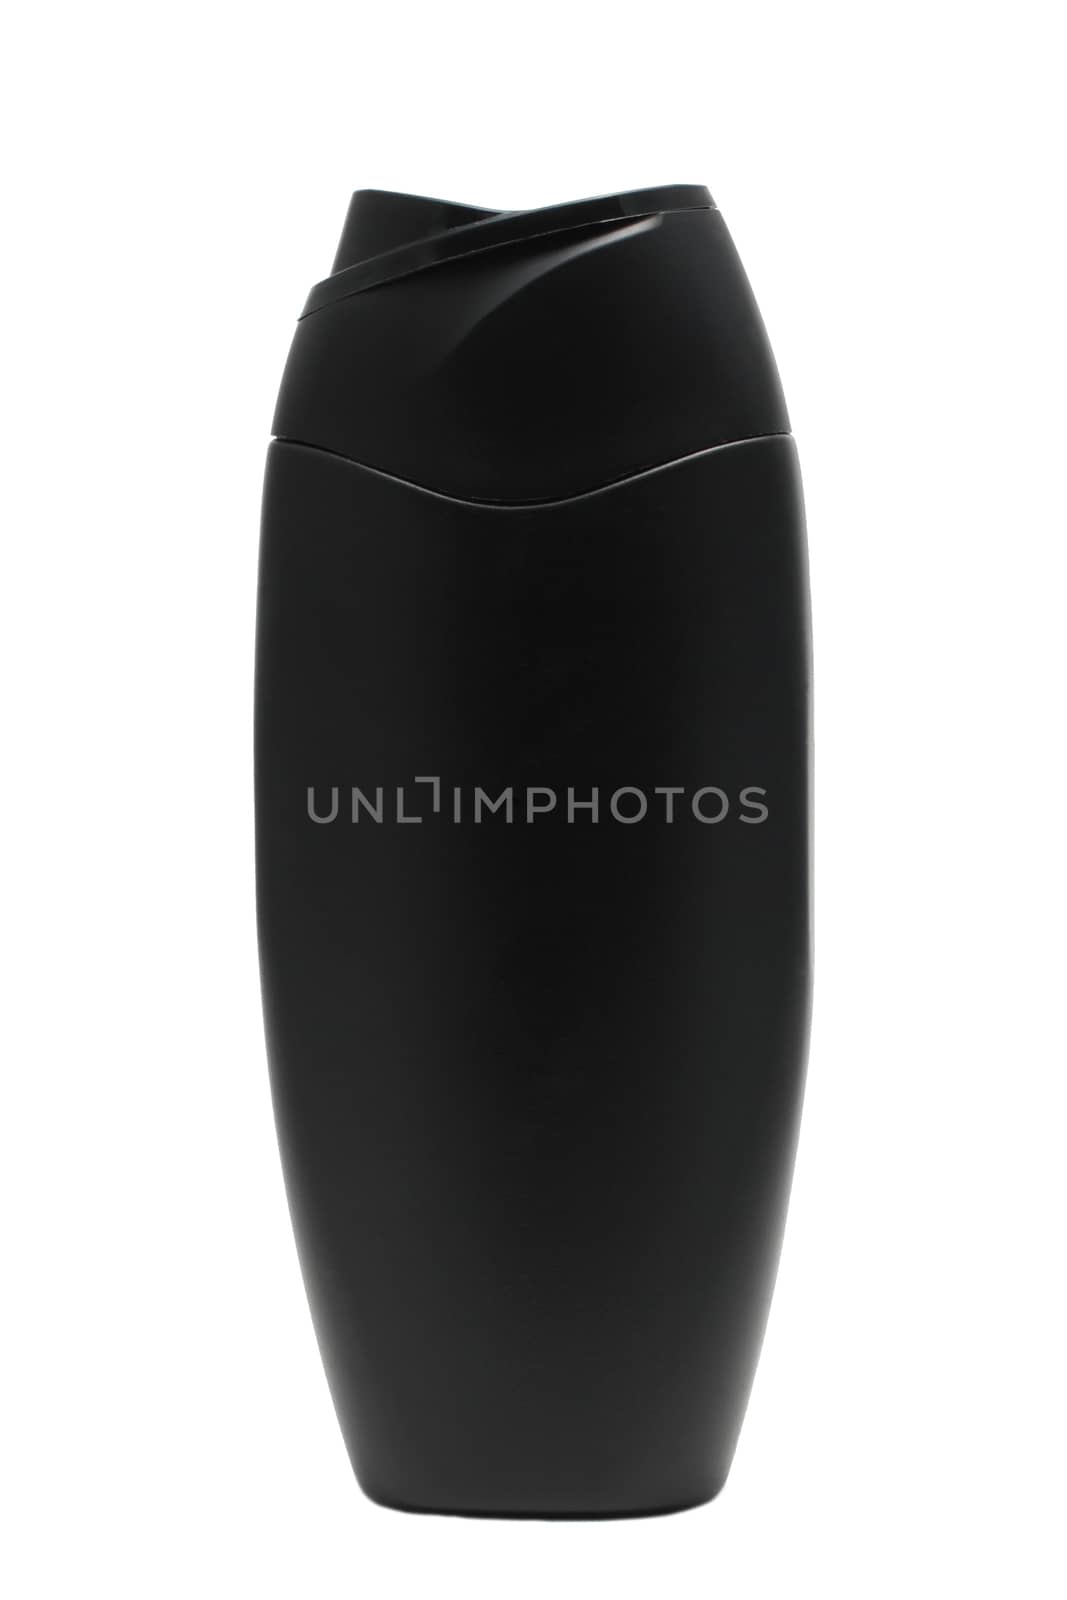 Black tube bottle of shampoo, conditioner, hair rinse, gel, mouthwash on a white background isolated.